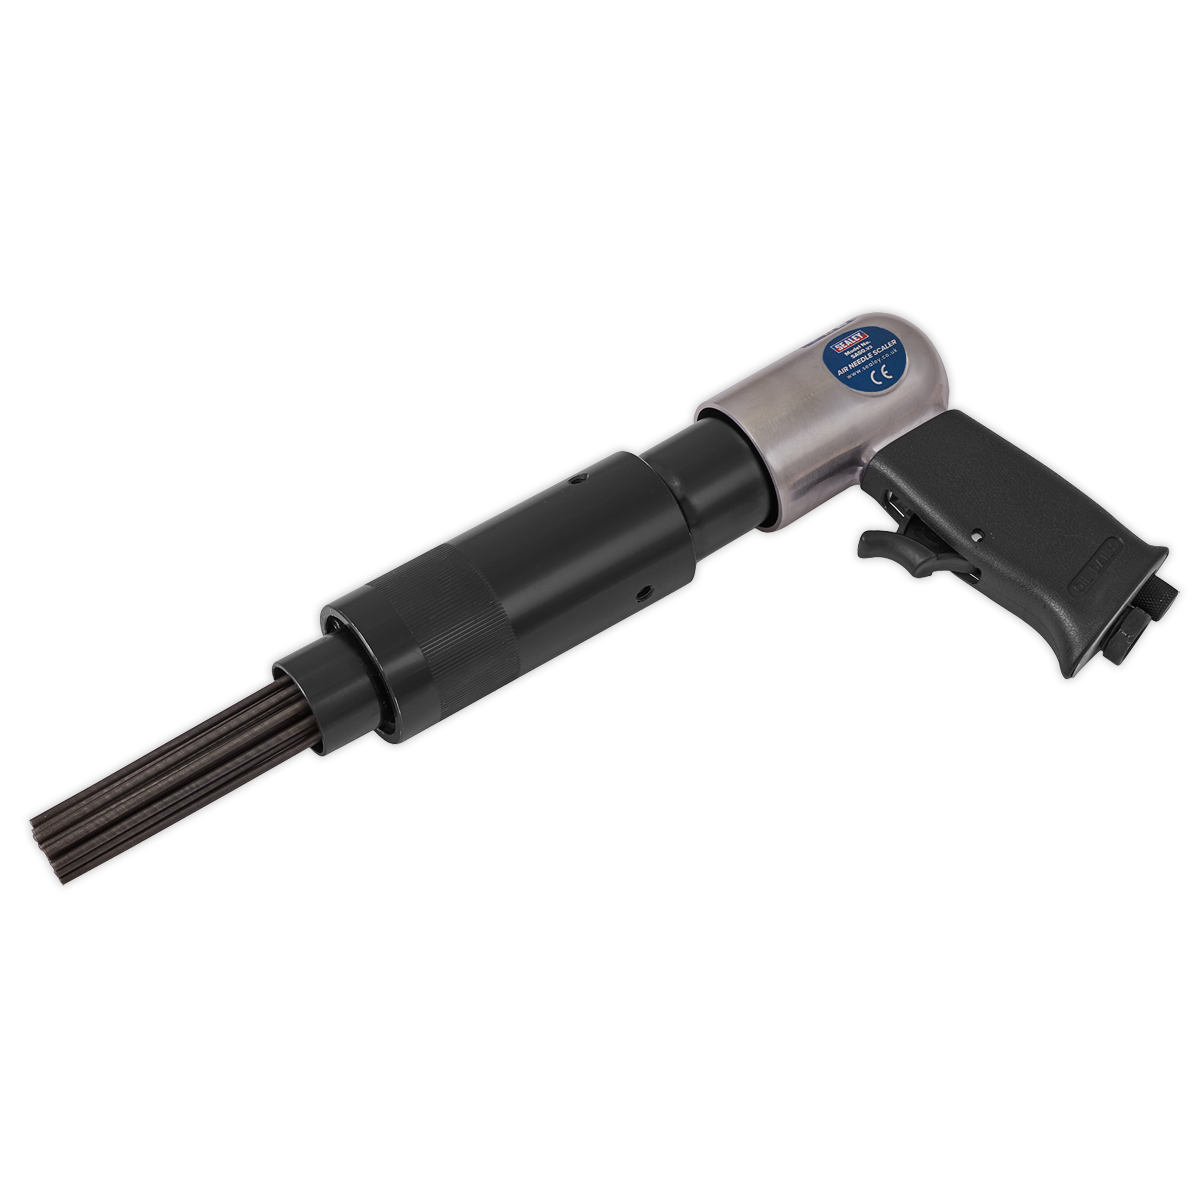 Sealey SA50 Air Needle Scaler - Pistol Type